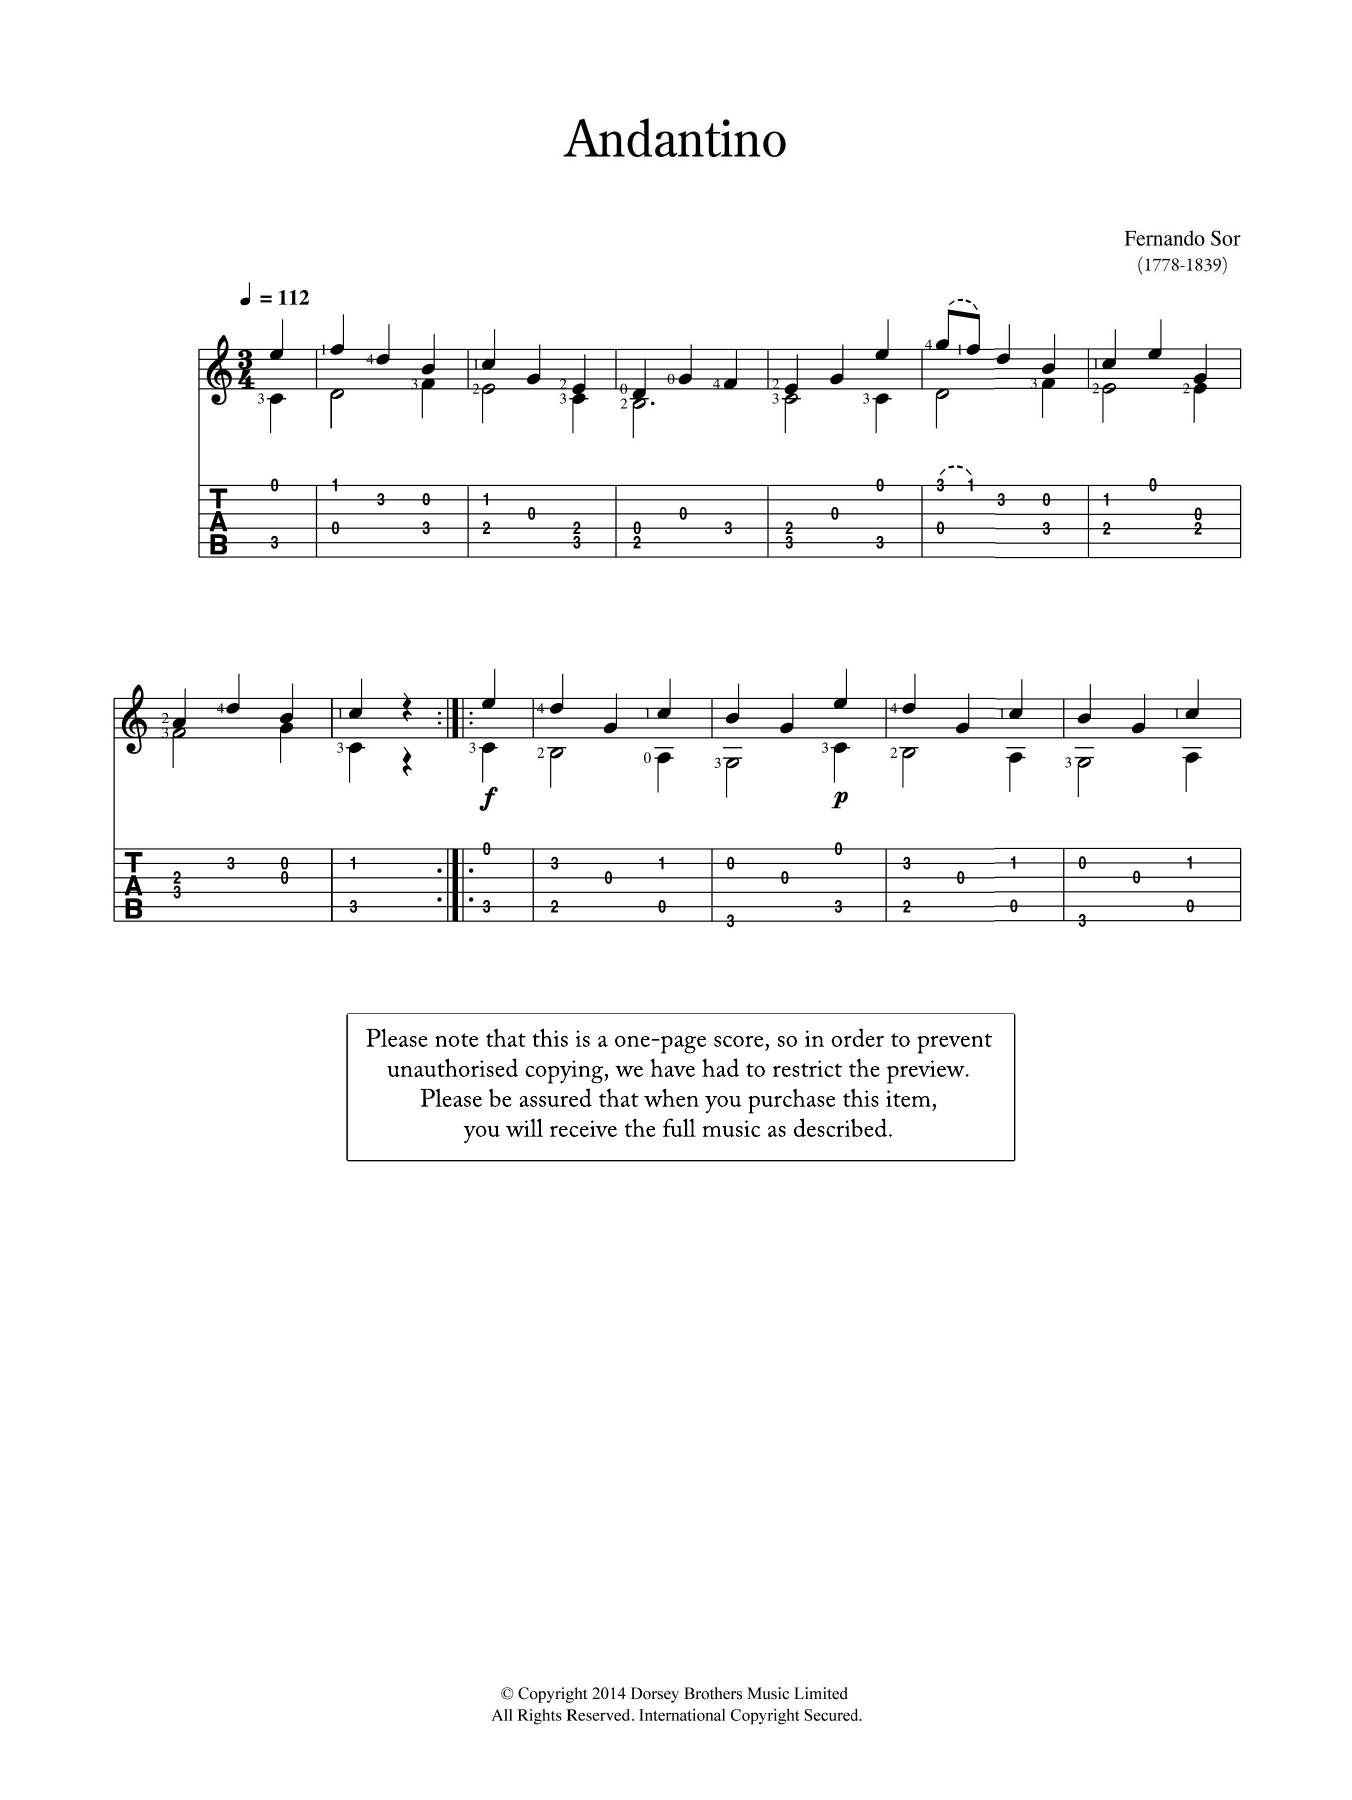 Fernando Sor Andantino Sheet Music Notes & Chords for Solo Guitar - Download or Print PDF